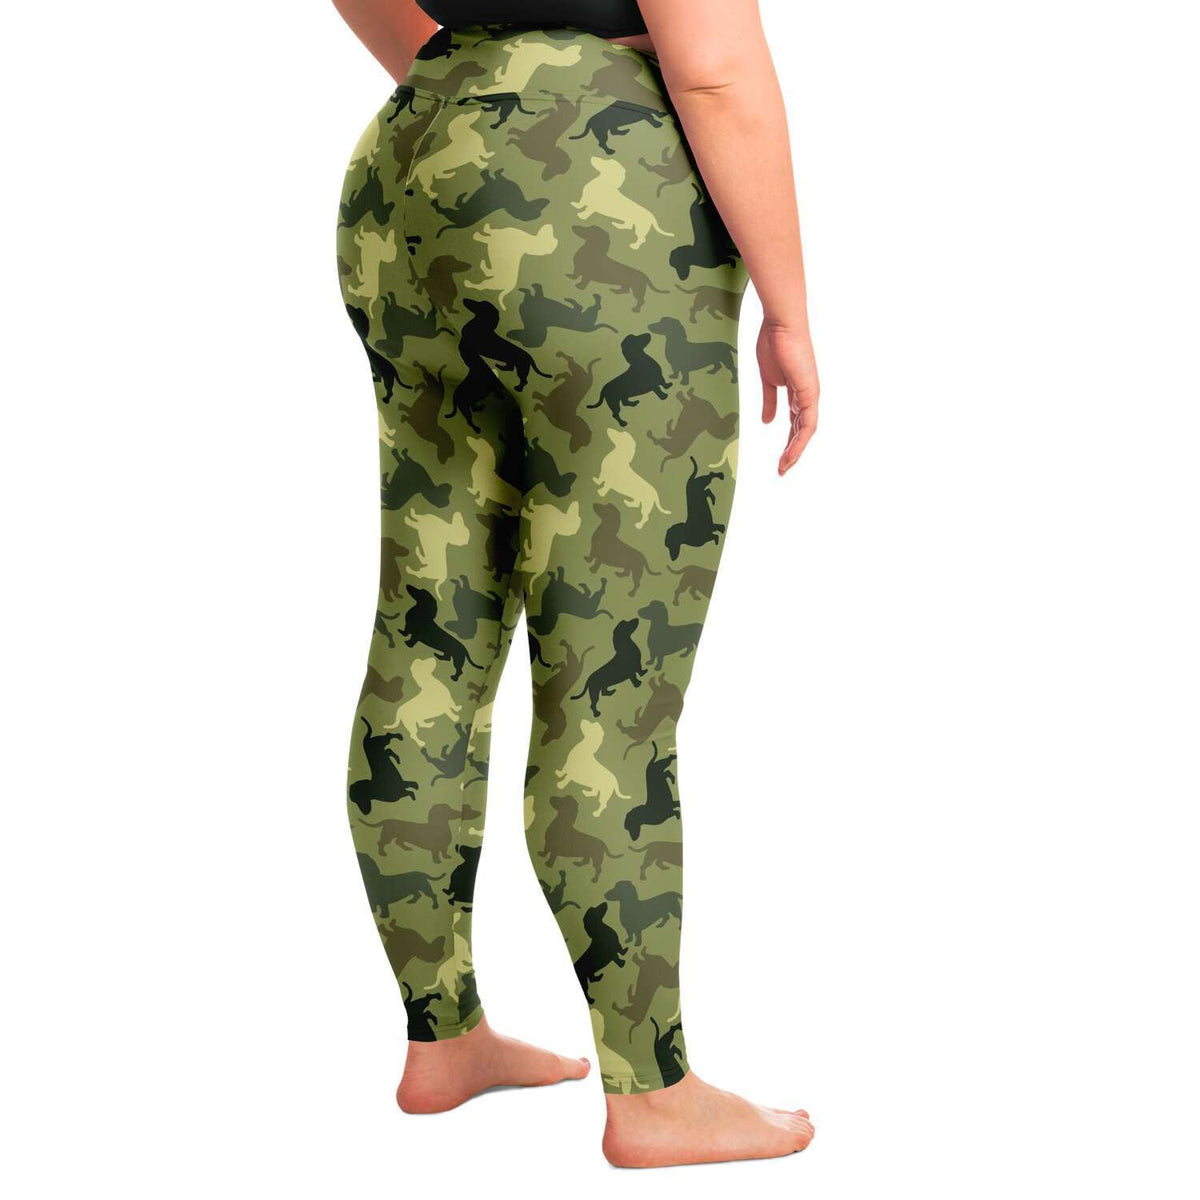 Designs by MyUtopia Shout Out:Dachshund Animal Print Camo Print Fashion Leggings - Plus Sizes,Select Your Size / Green,Plus Size Legging - AOP